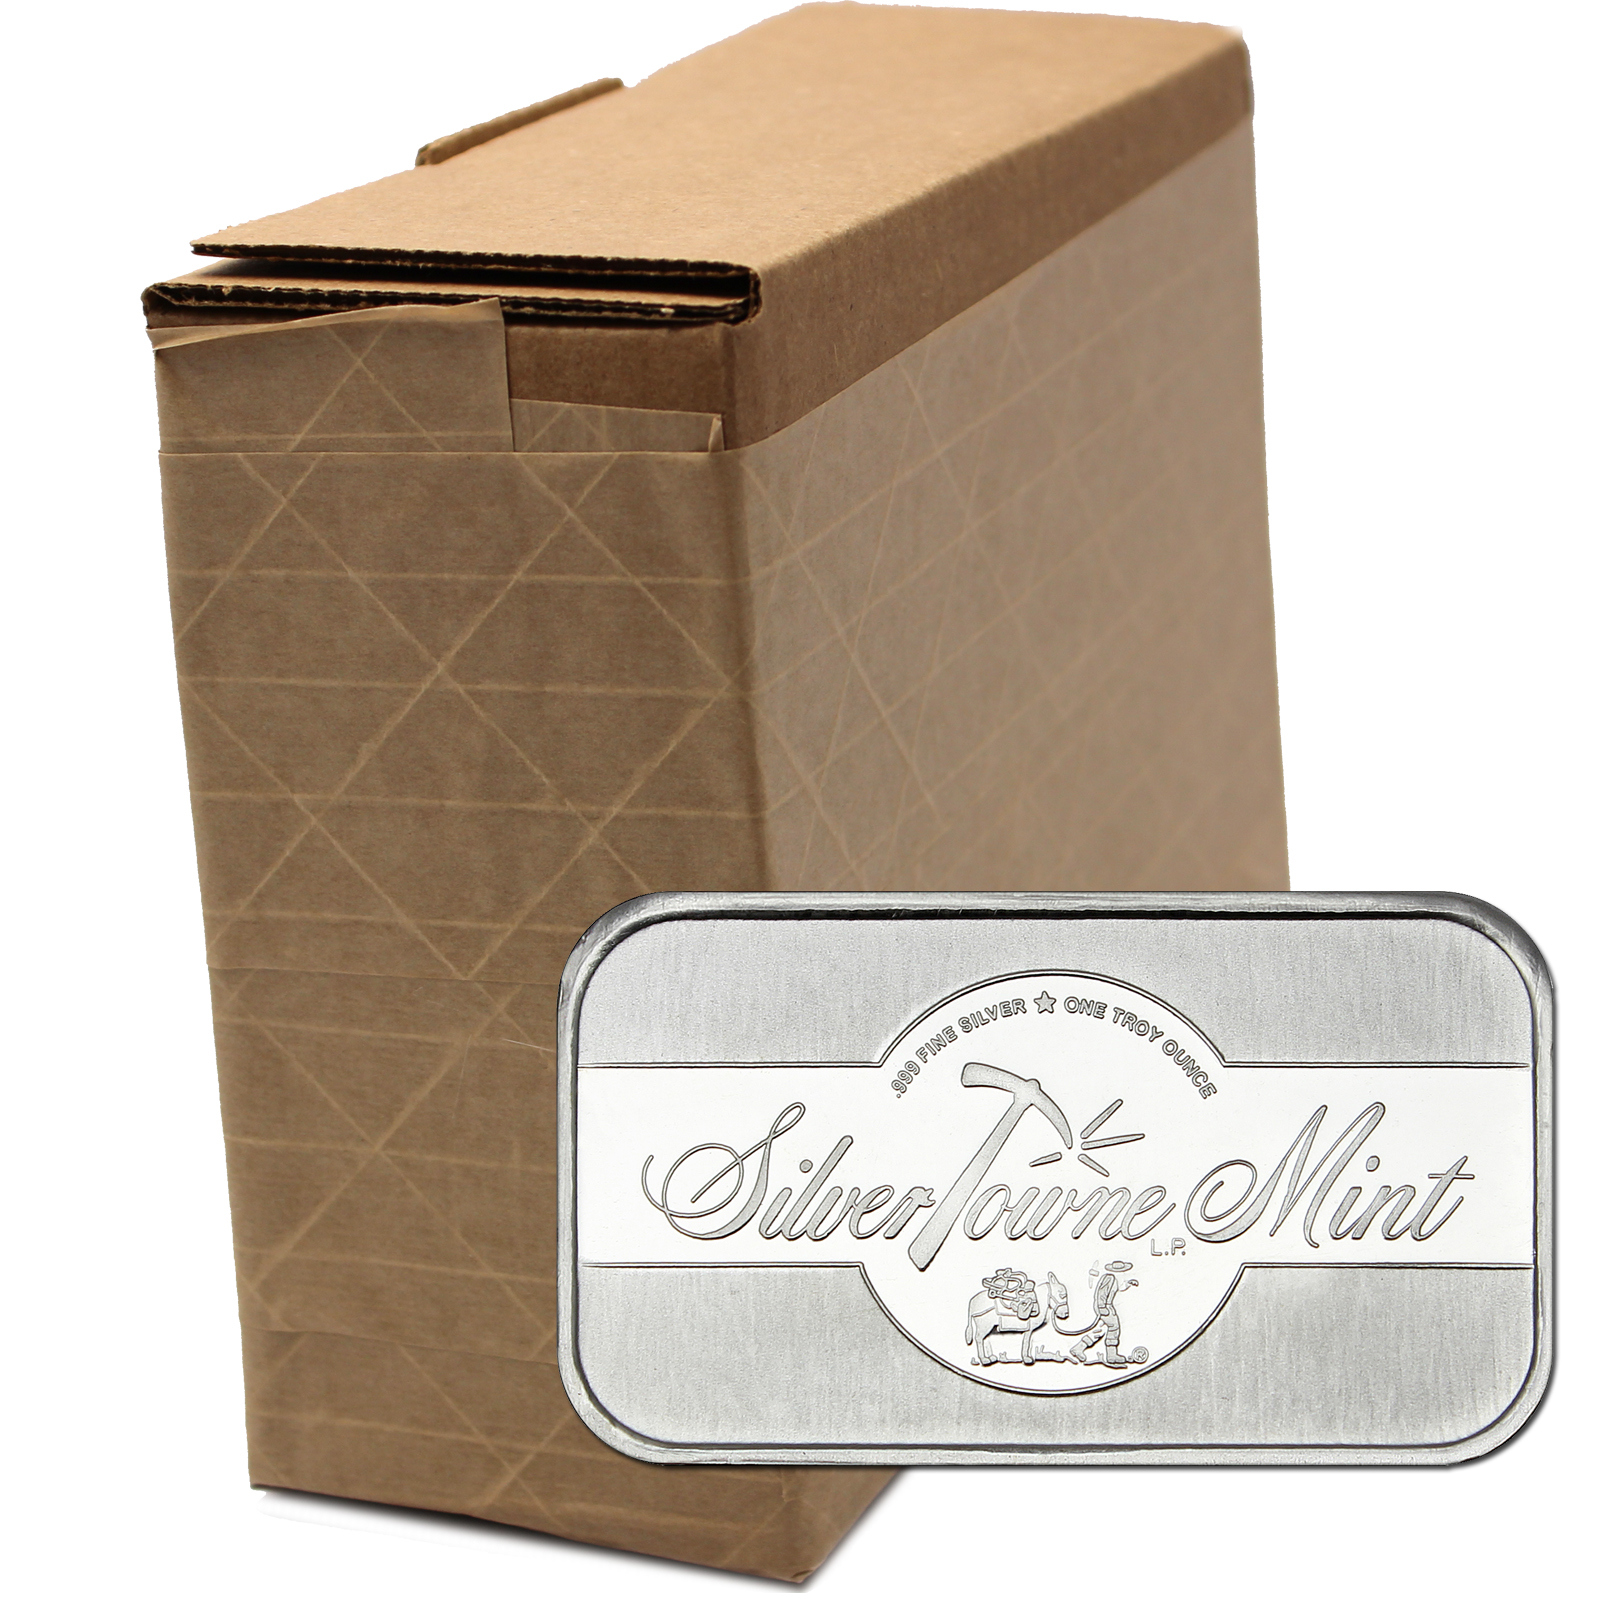 SilverTowne Mint Signature 1oz .999 Fine Silver Bar LOT of 10 Silver